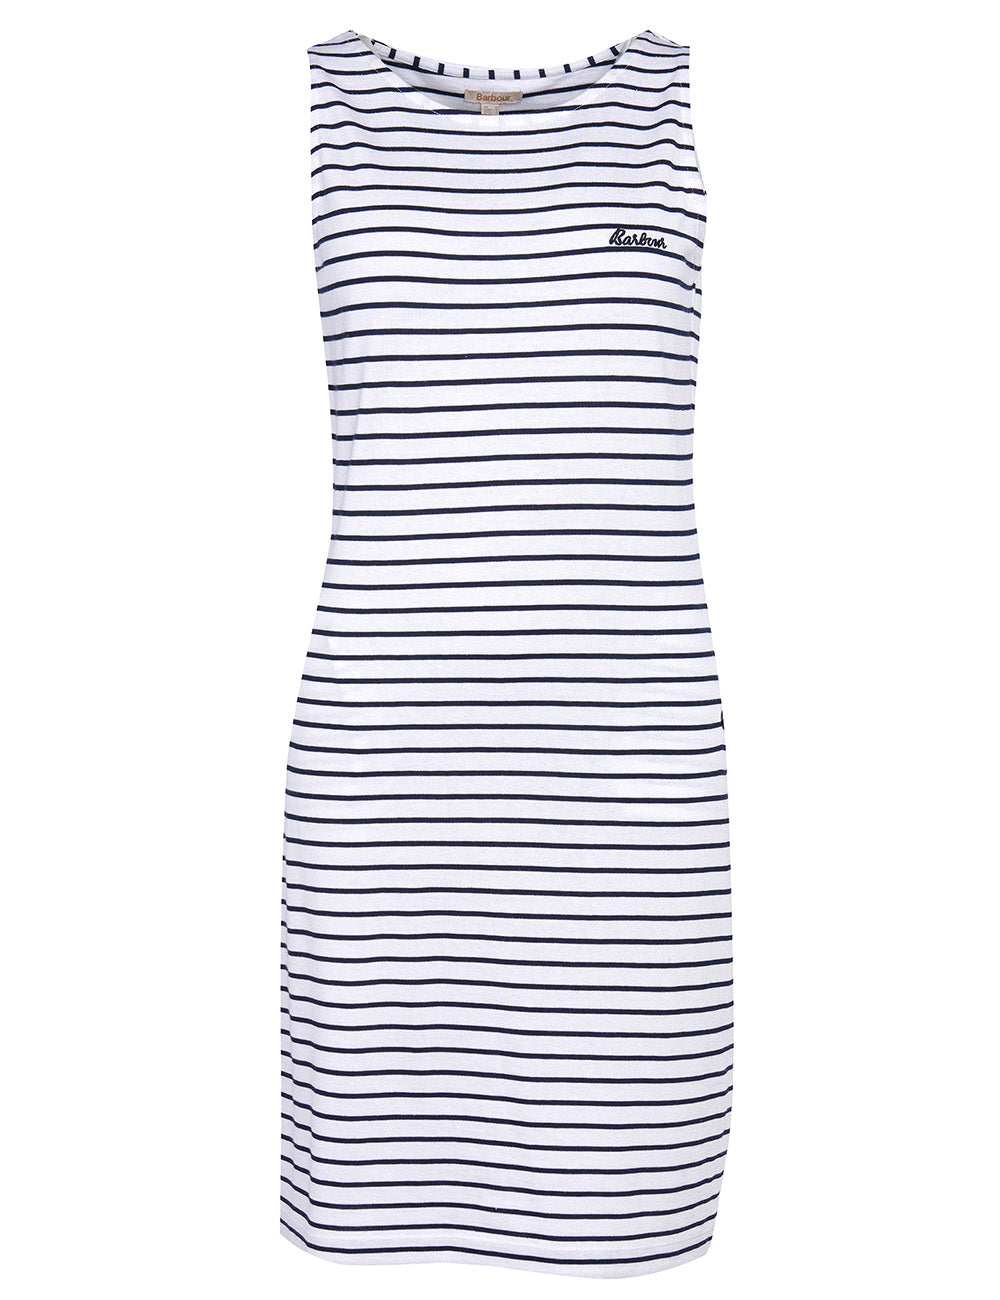 Barbour Dalmore Stripe Dress - White/Navy